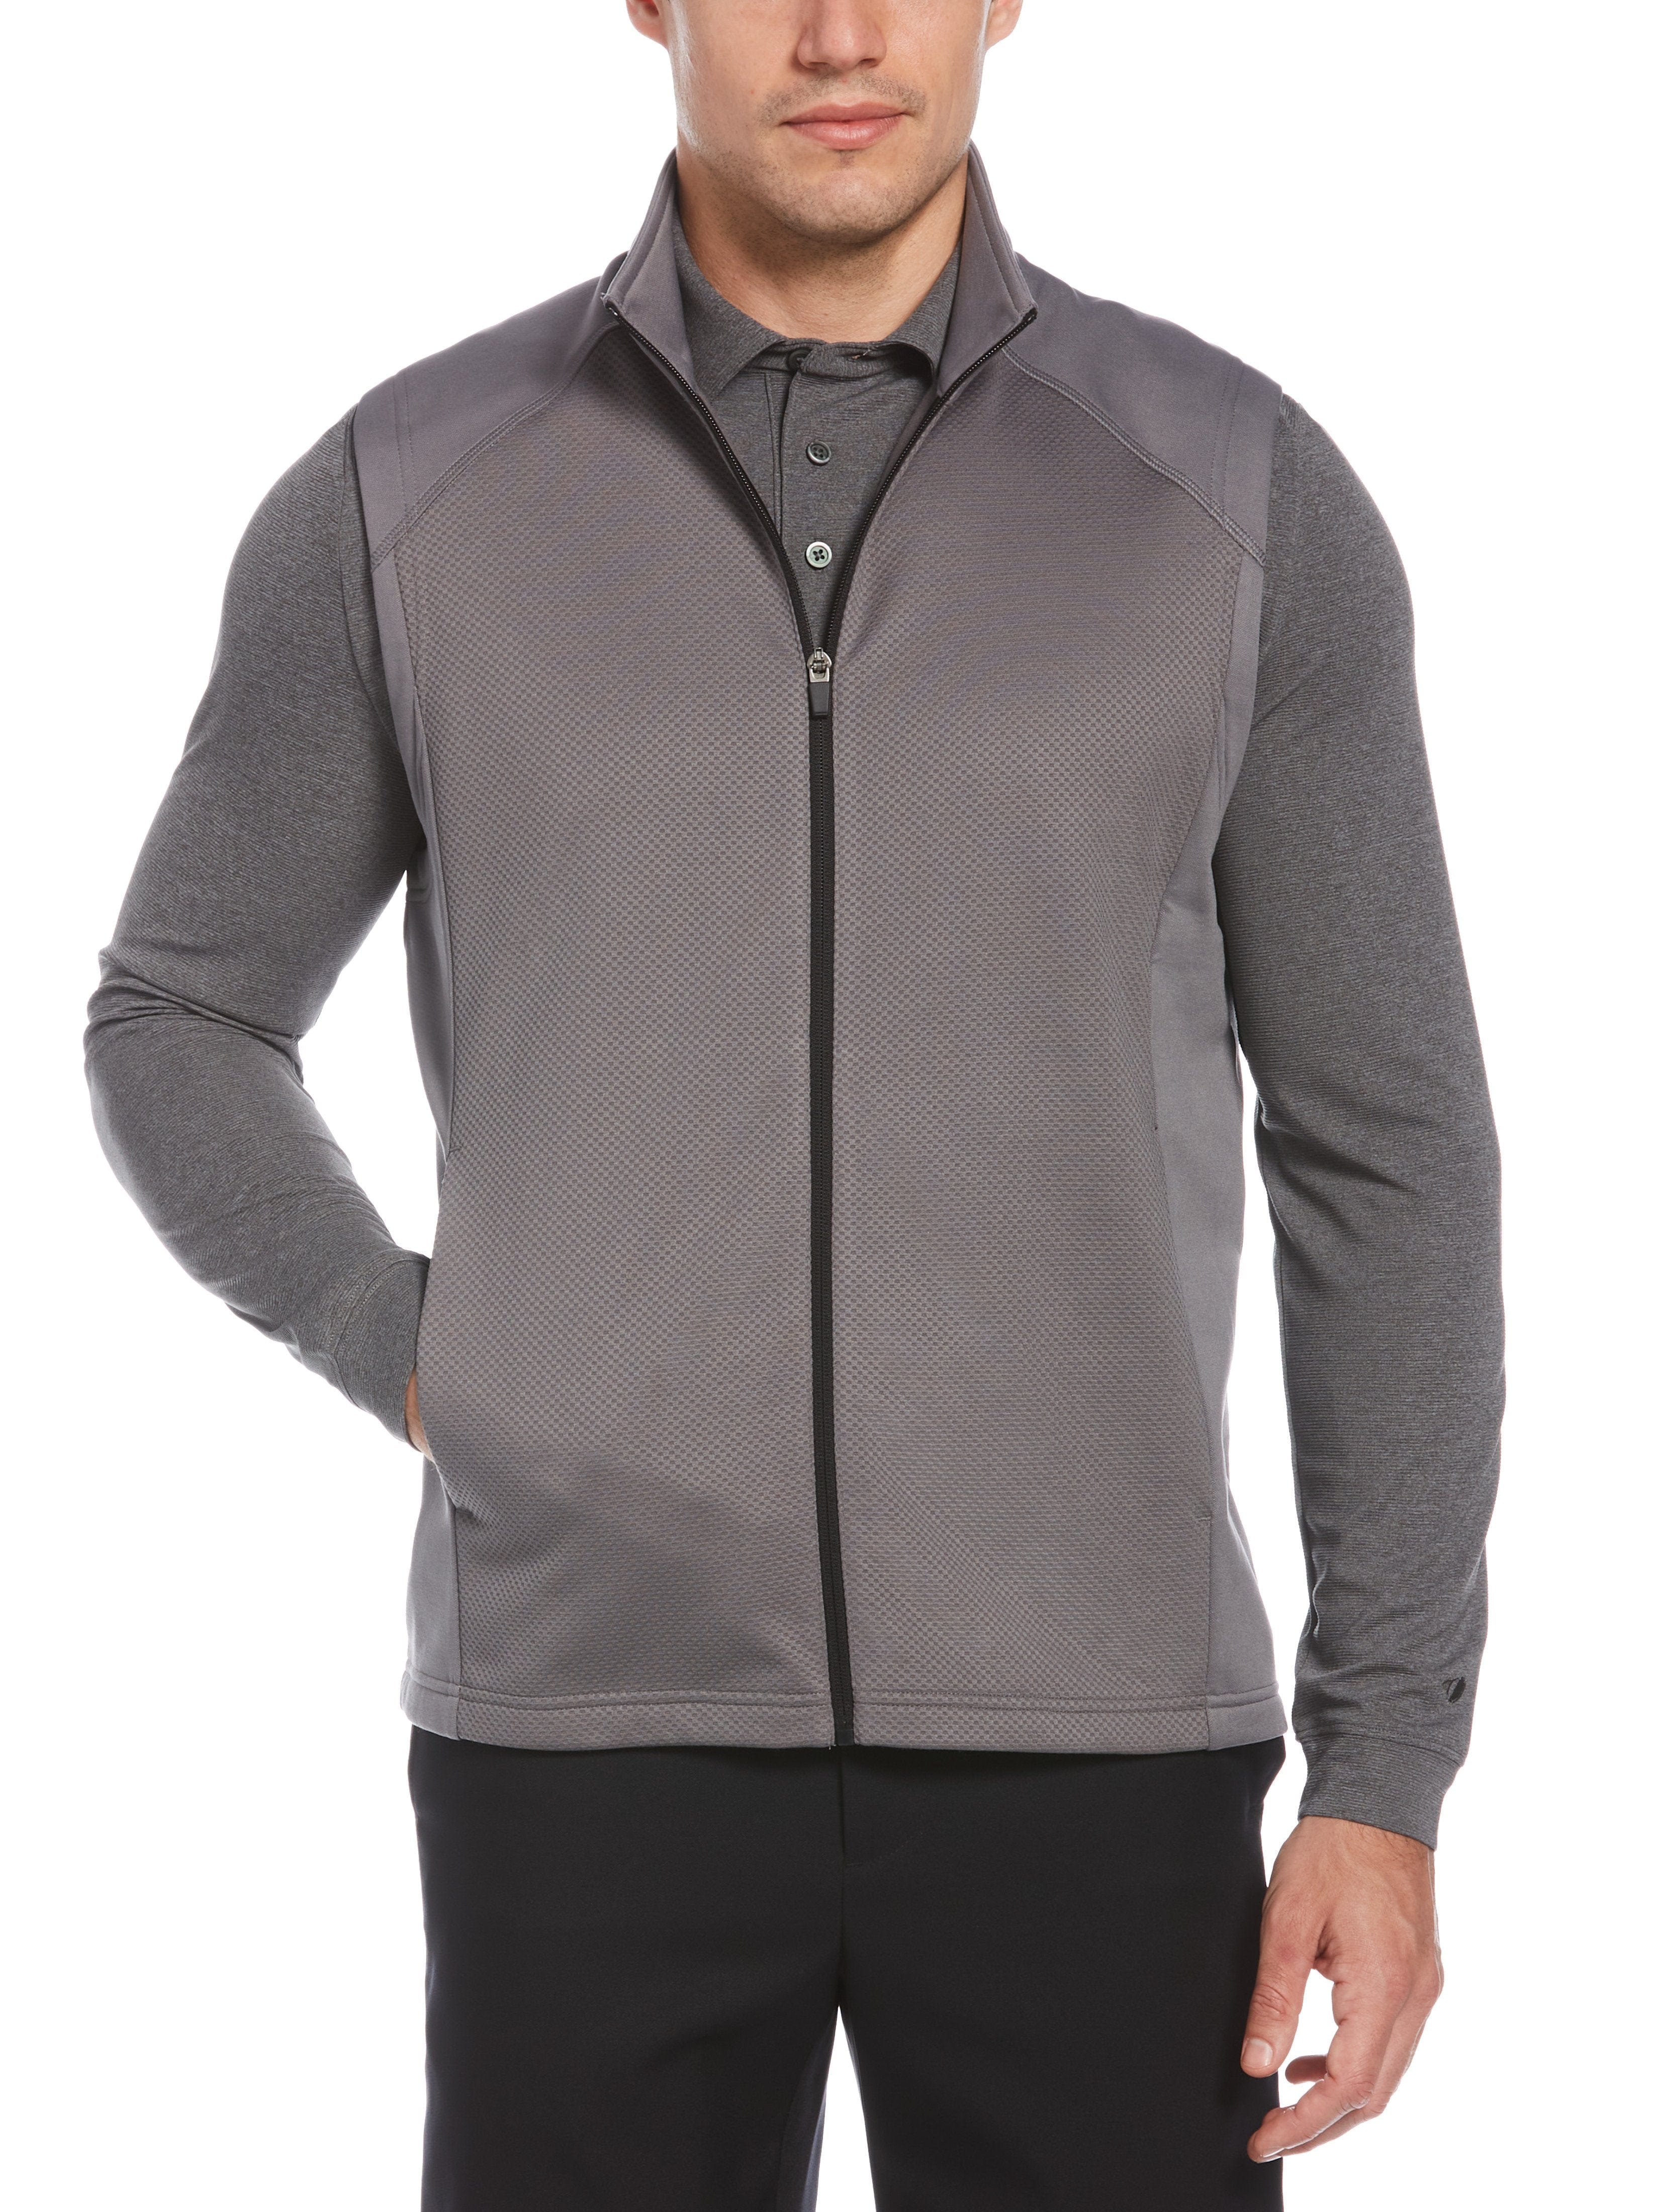 PGA TOUR Apparel Mens Mixed Texture Fleece Golf Vest Top, Size 2XL, Quiet Shade Gray, 100% Polyester | Golf Apparel Shop